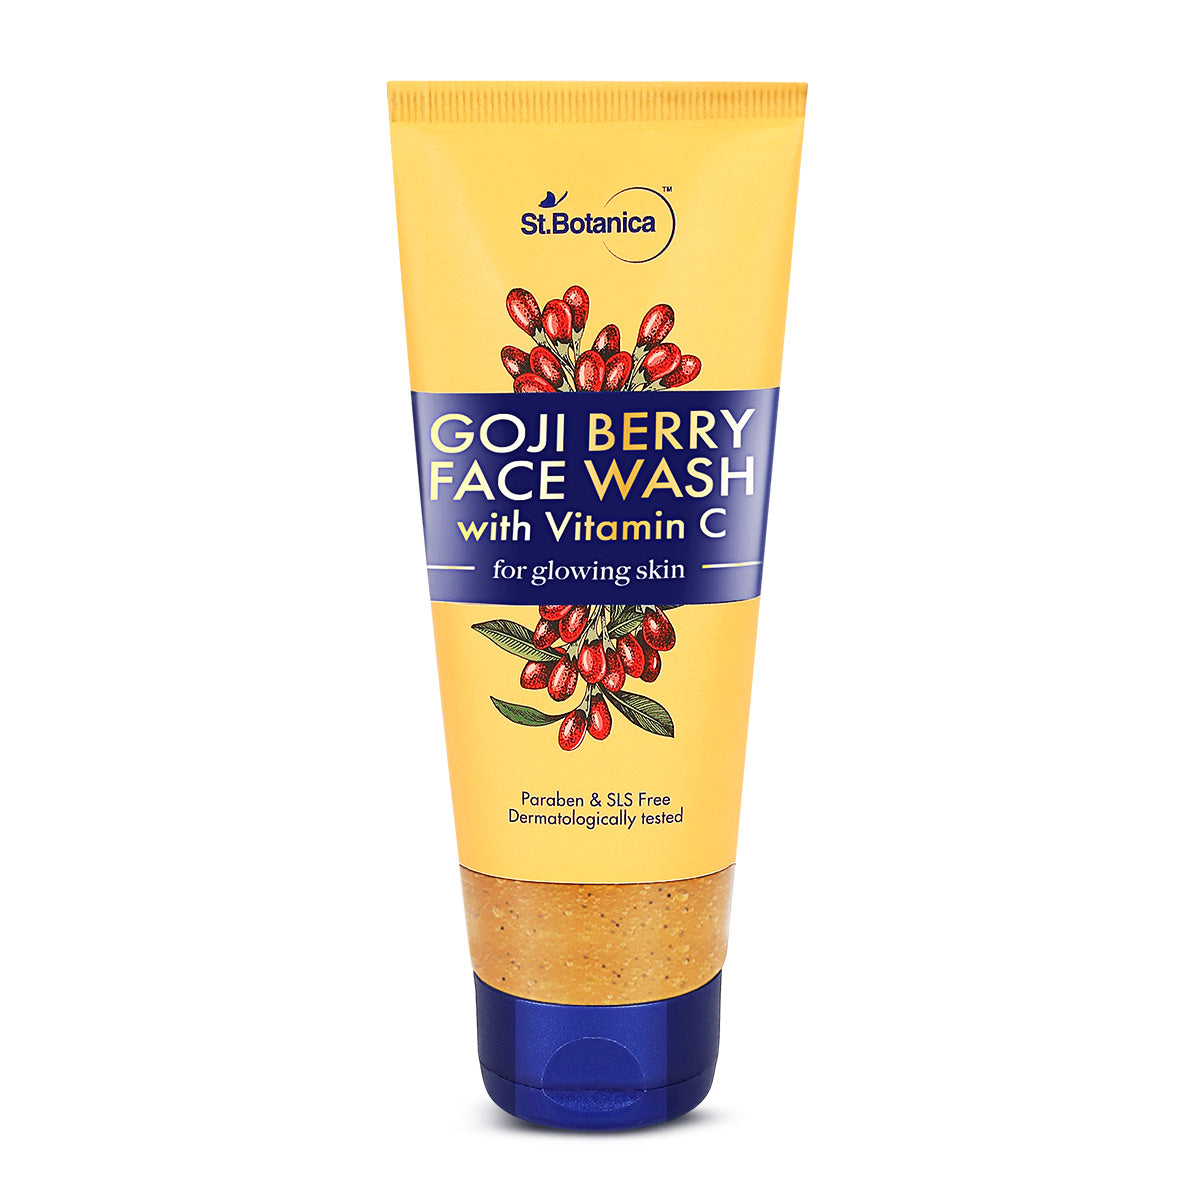 St.Botanica Goji Berry Face Wash, 100ml with Goji Berry, Vitamin C & Dragonfruit | For Clear, Even-Toned Skin | Paraben Free, Cruelty Free & Vegan